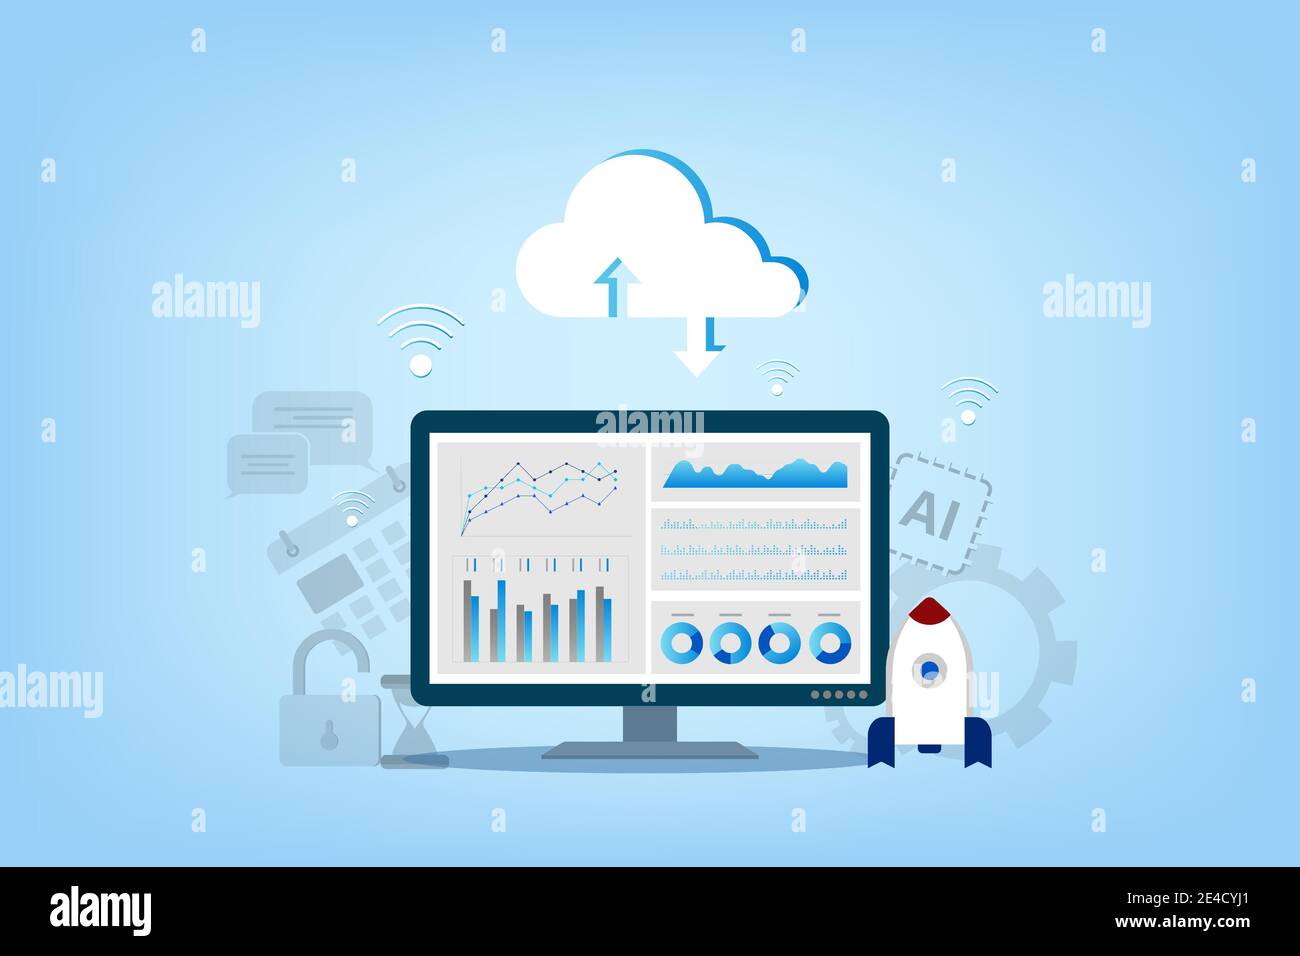 Cloud-Computing-Technologie mit Cloud-Symbolen und digitalen Gerätevektoren Abbildung Stock Vektor